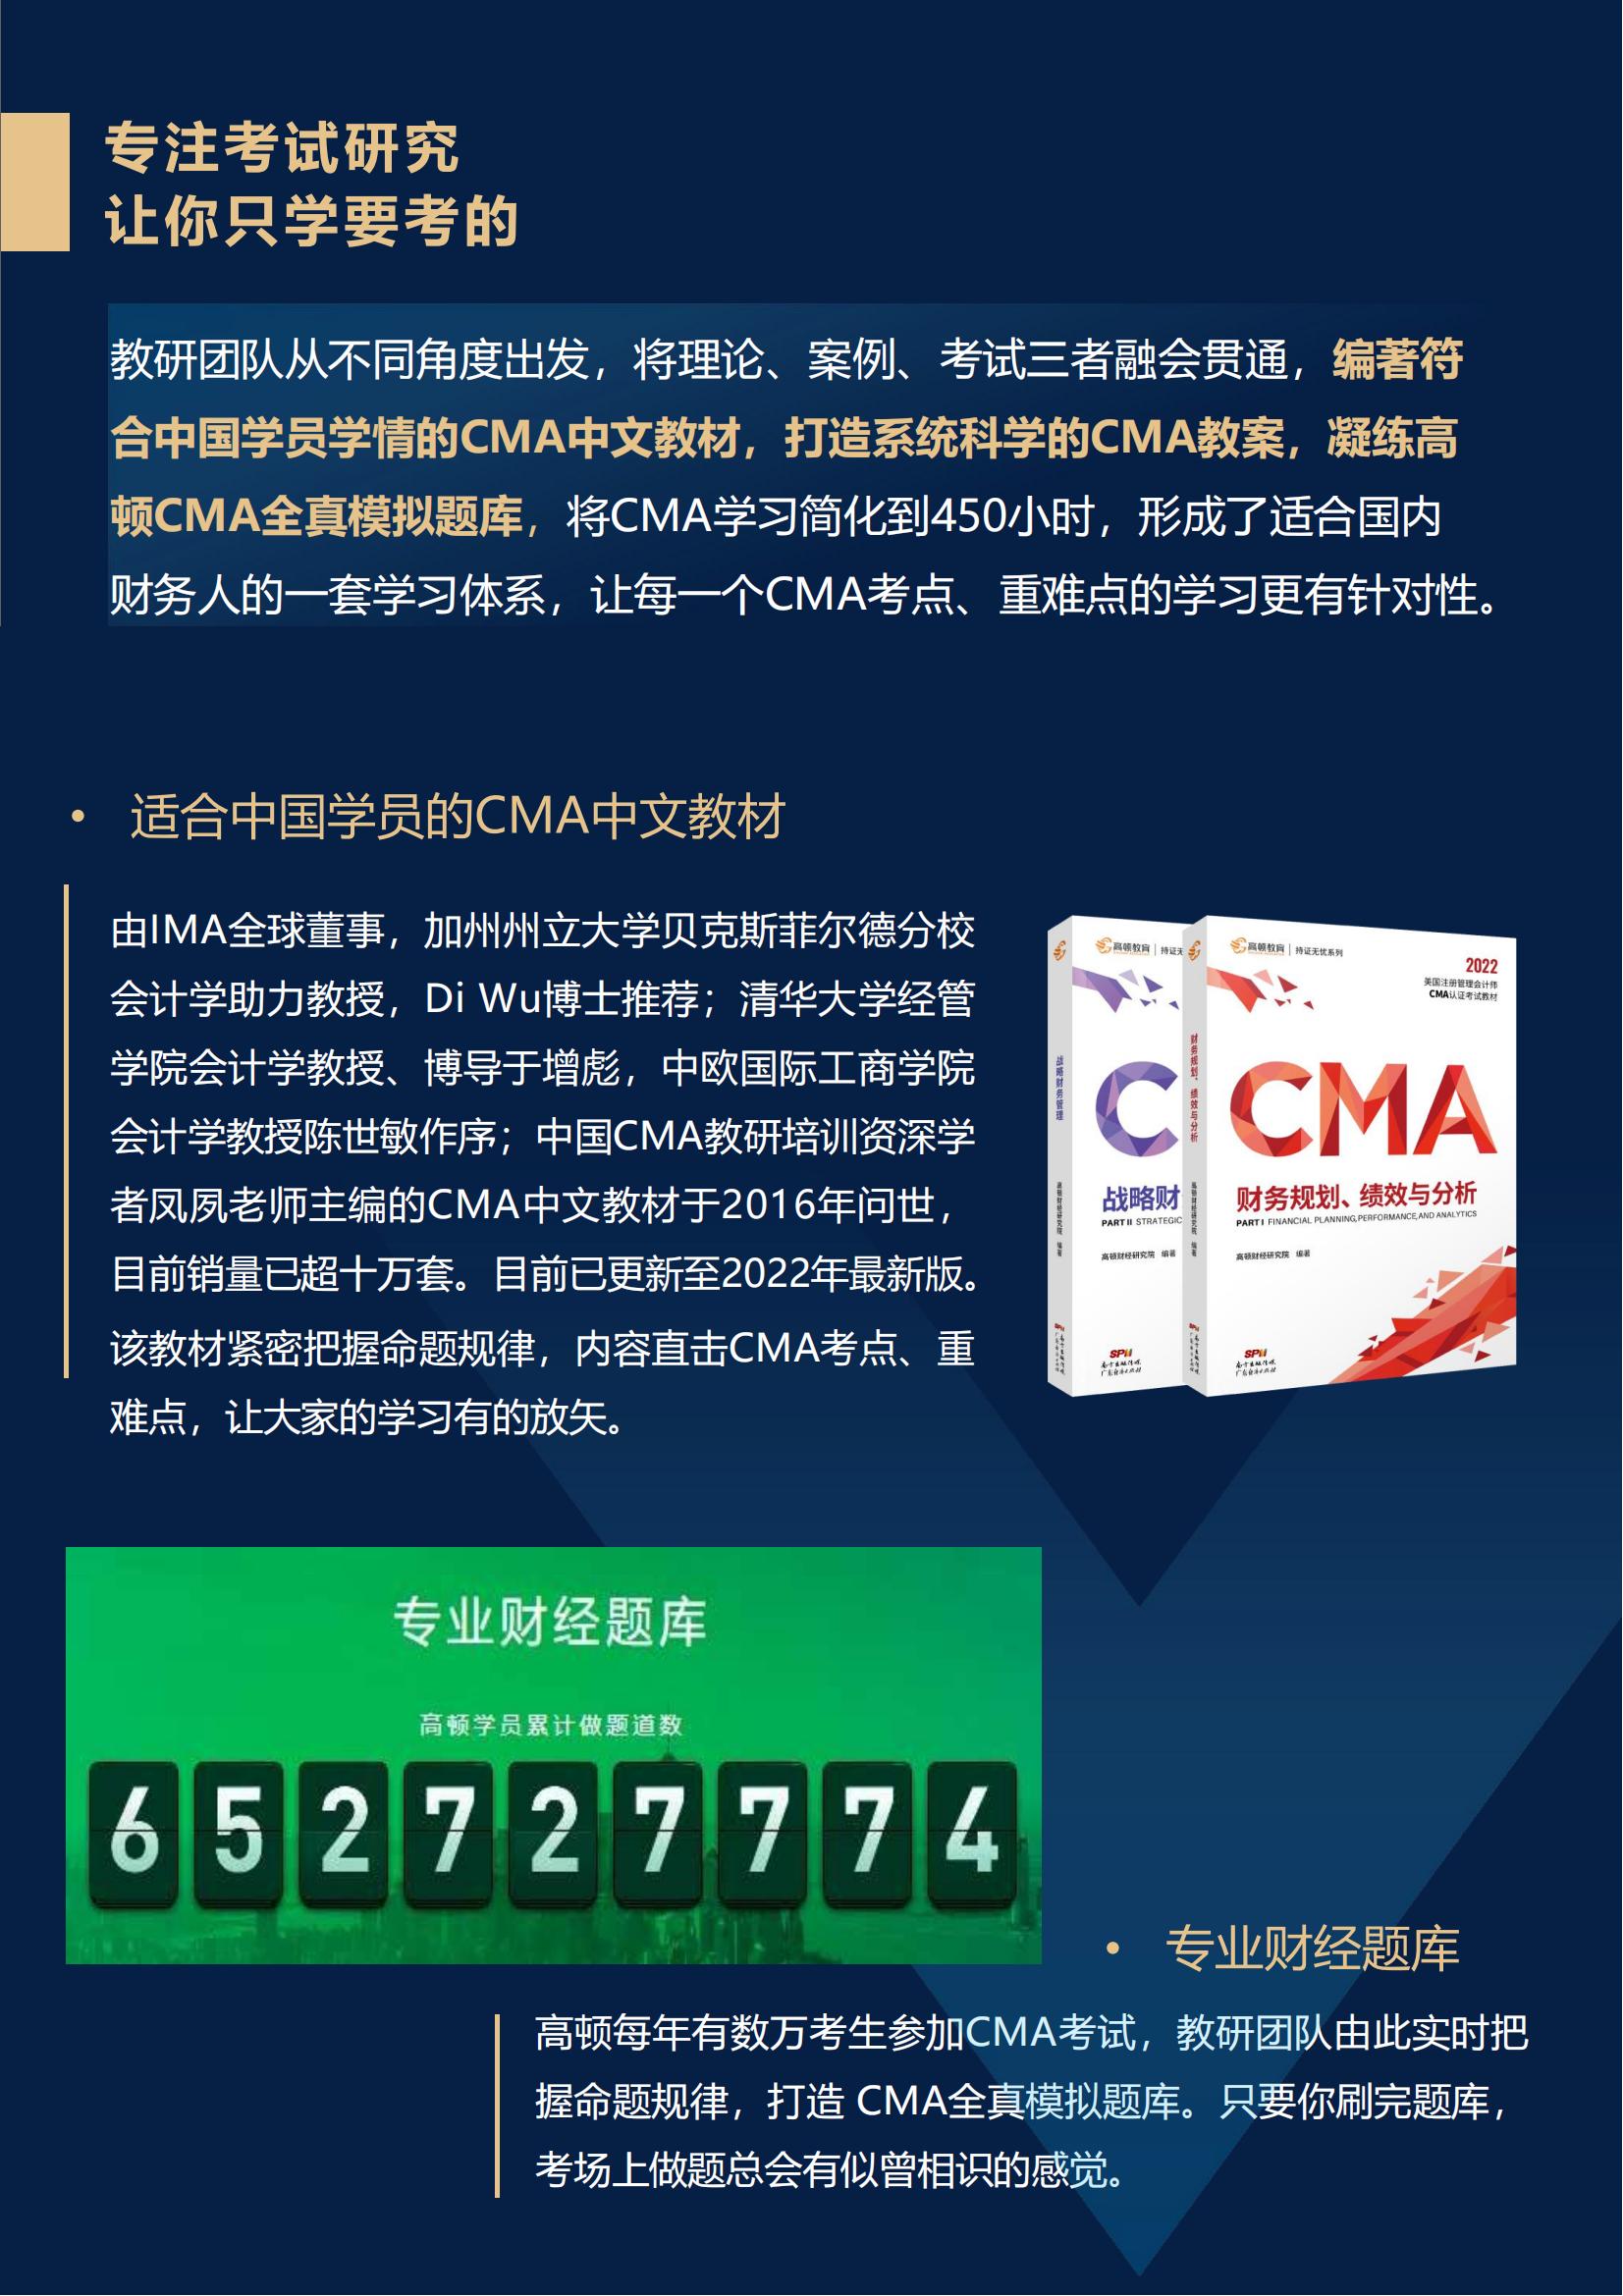 https://simg01.gaodunwangxiao.com/uploadfiles/product-center/202211/25/190f5_20221125141032.jpg